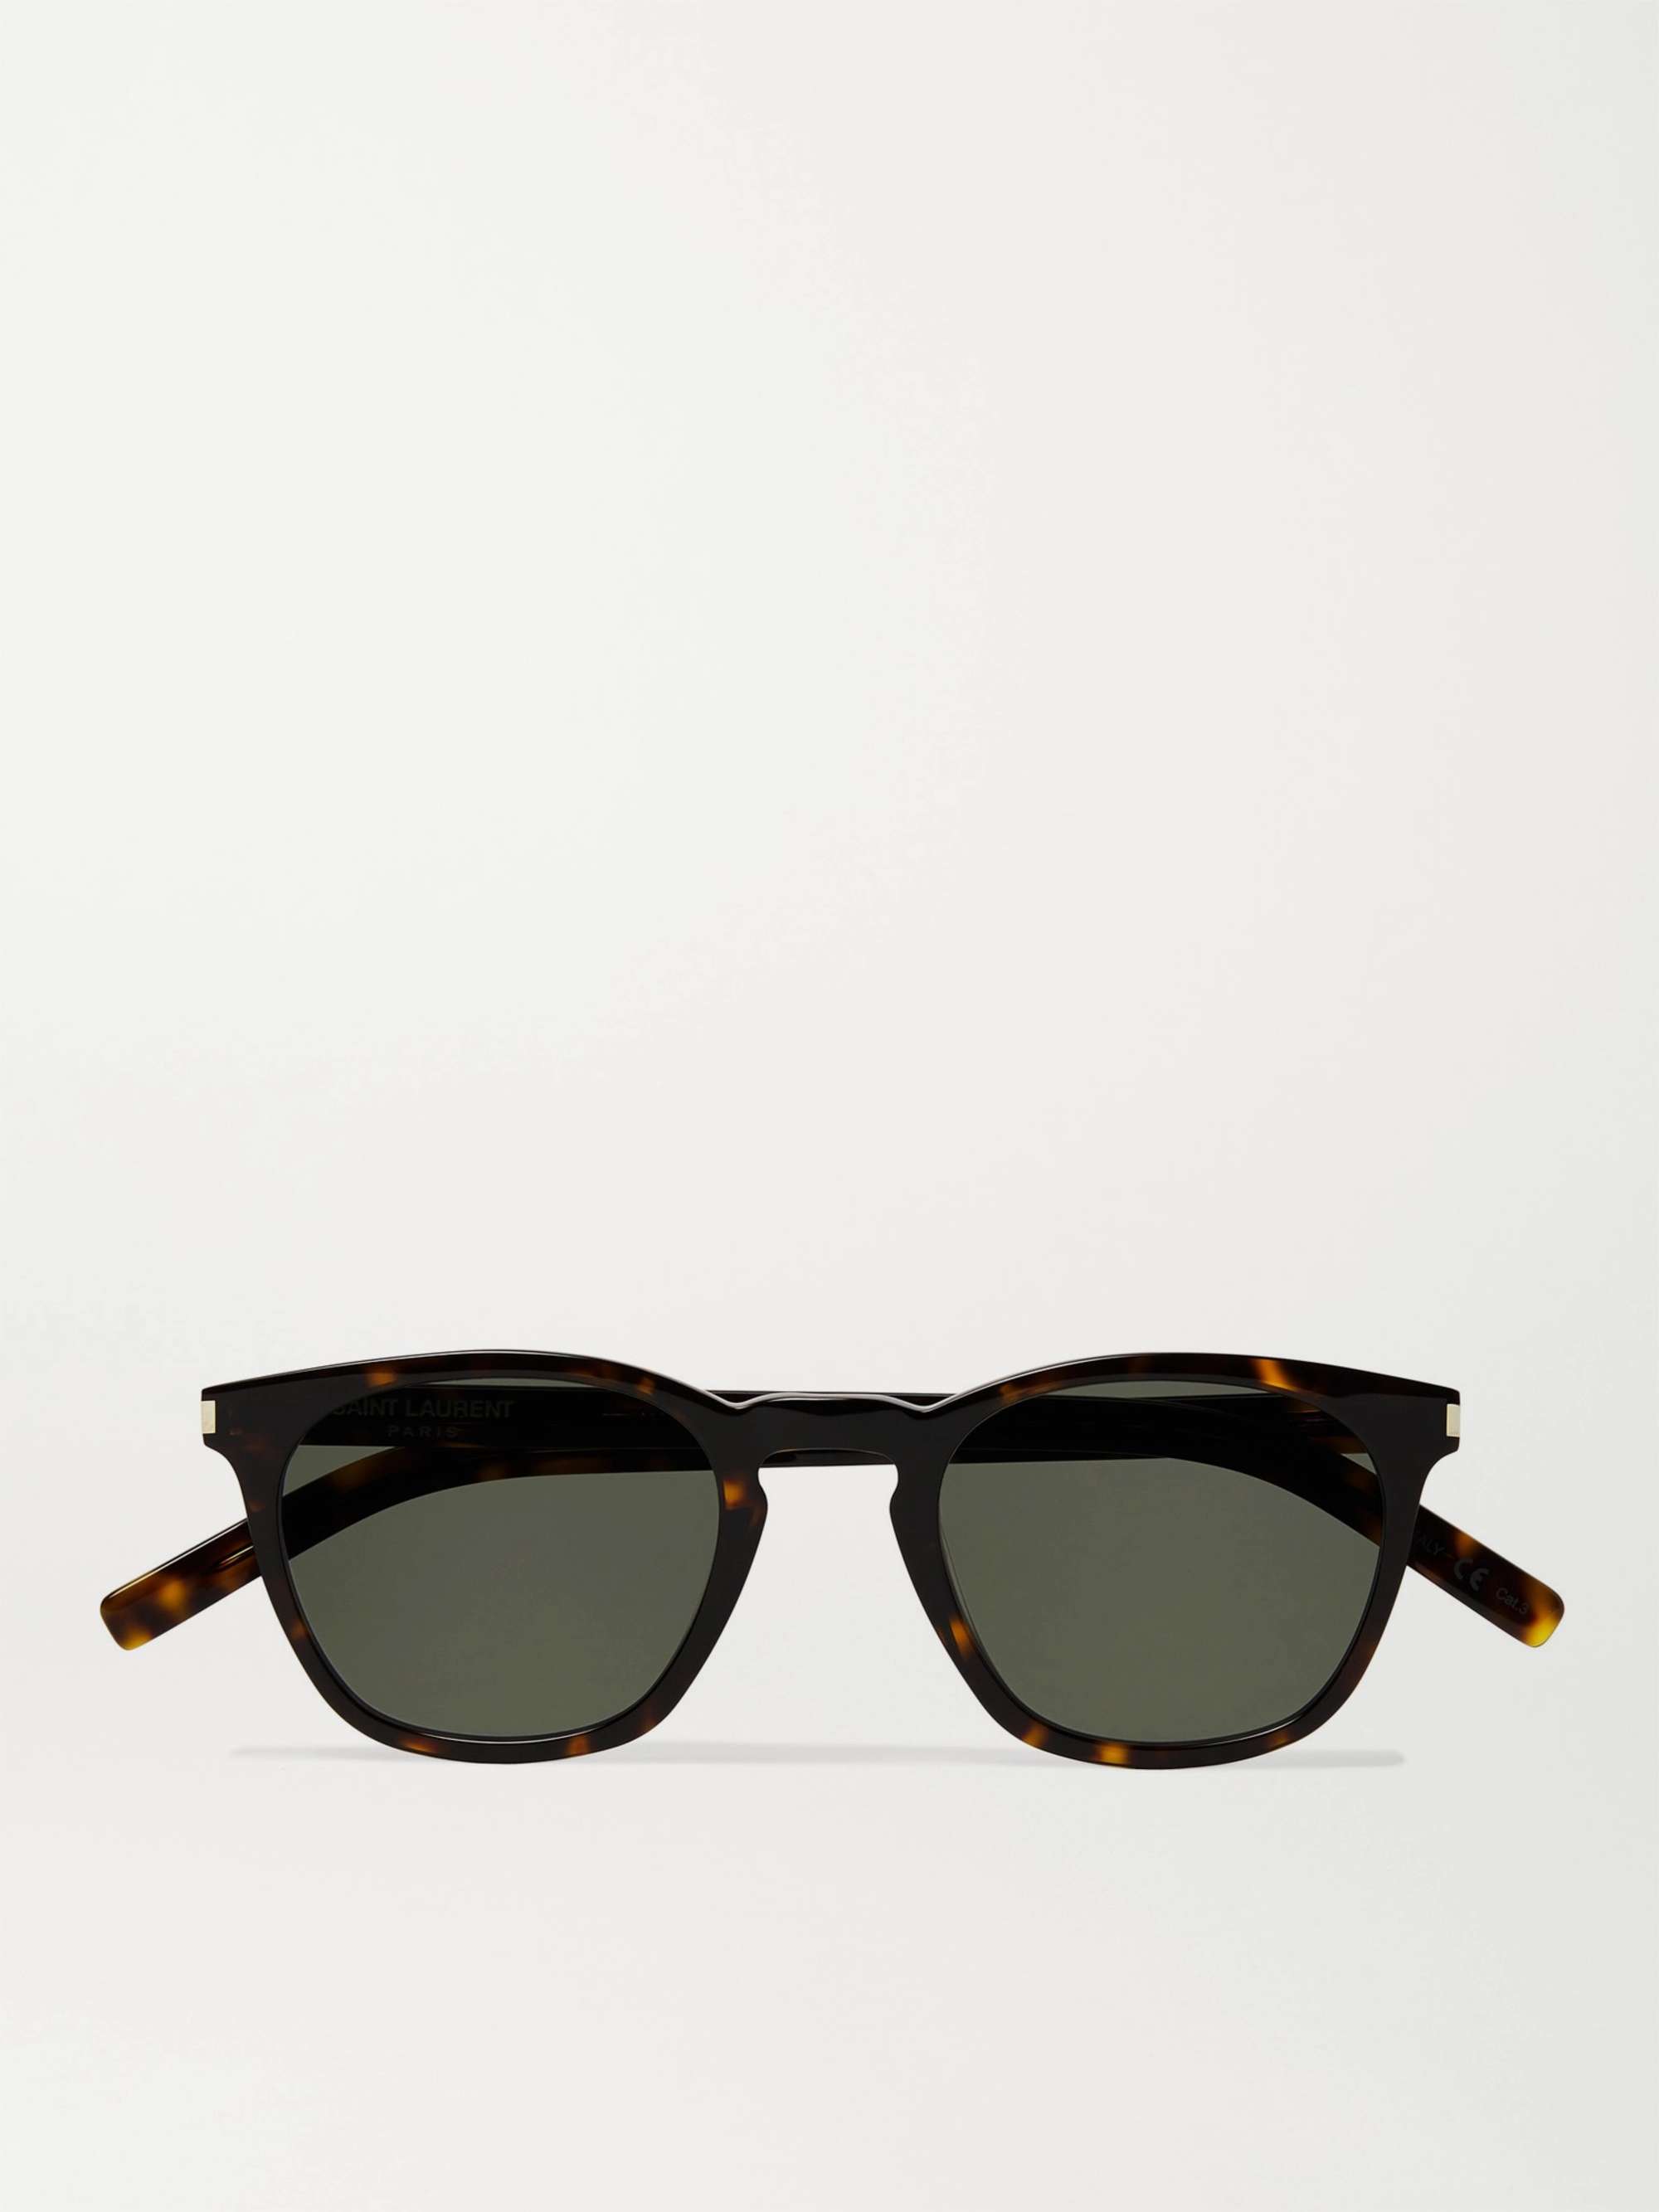 SAINT LAURENT EYEWEAR D-Frame Tortoiseshell Acetate Sunglasses